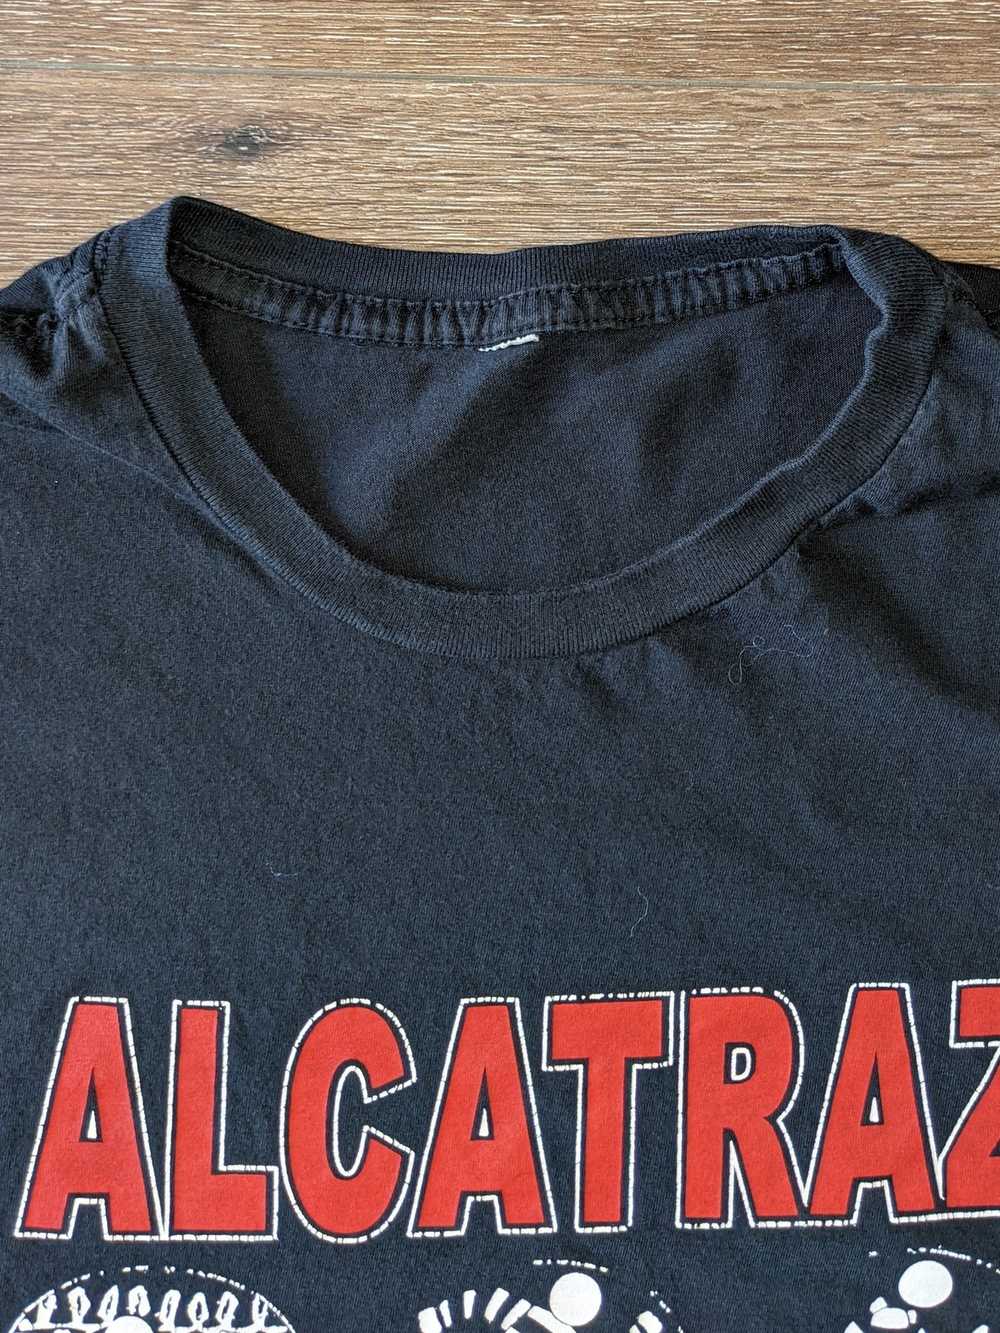 Vintage Vintage Alcatraz triathlon t-shirt - image 3